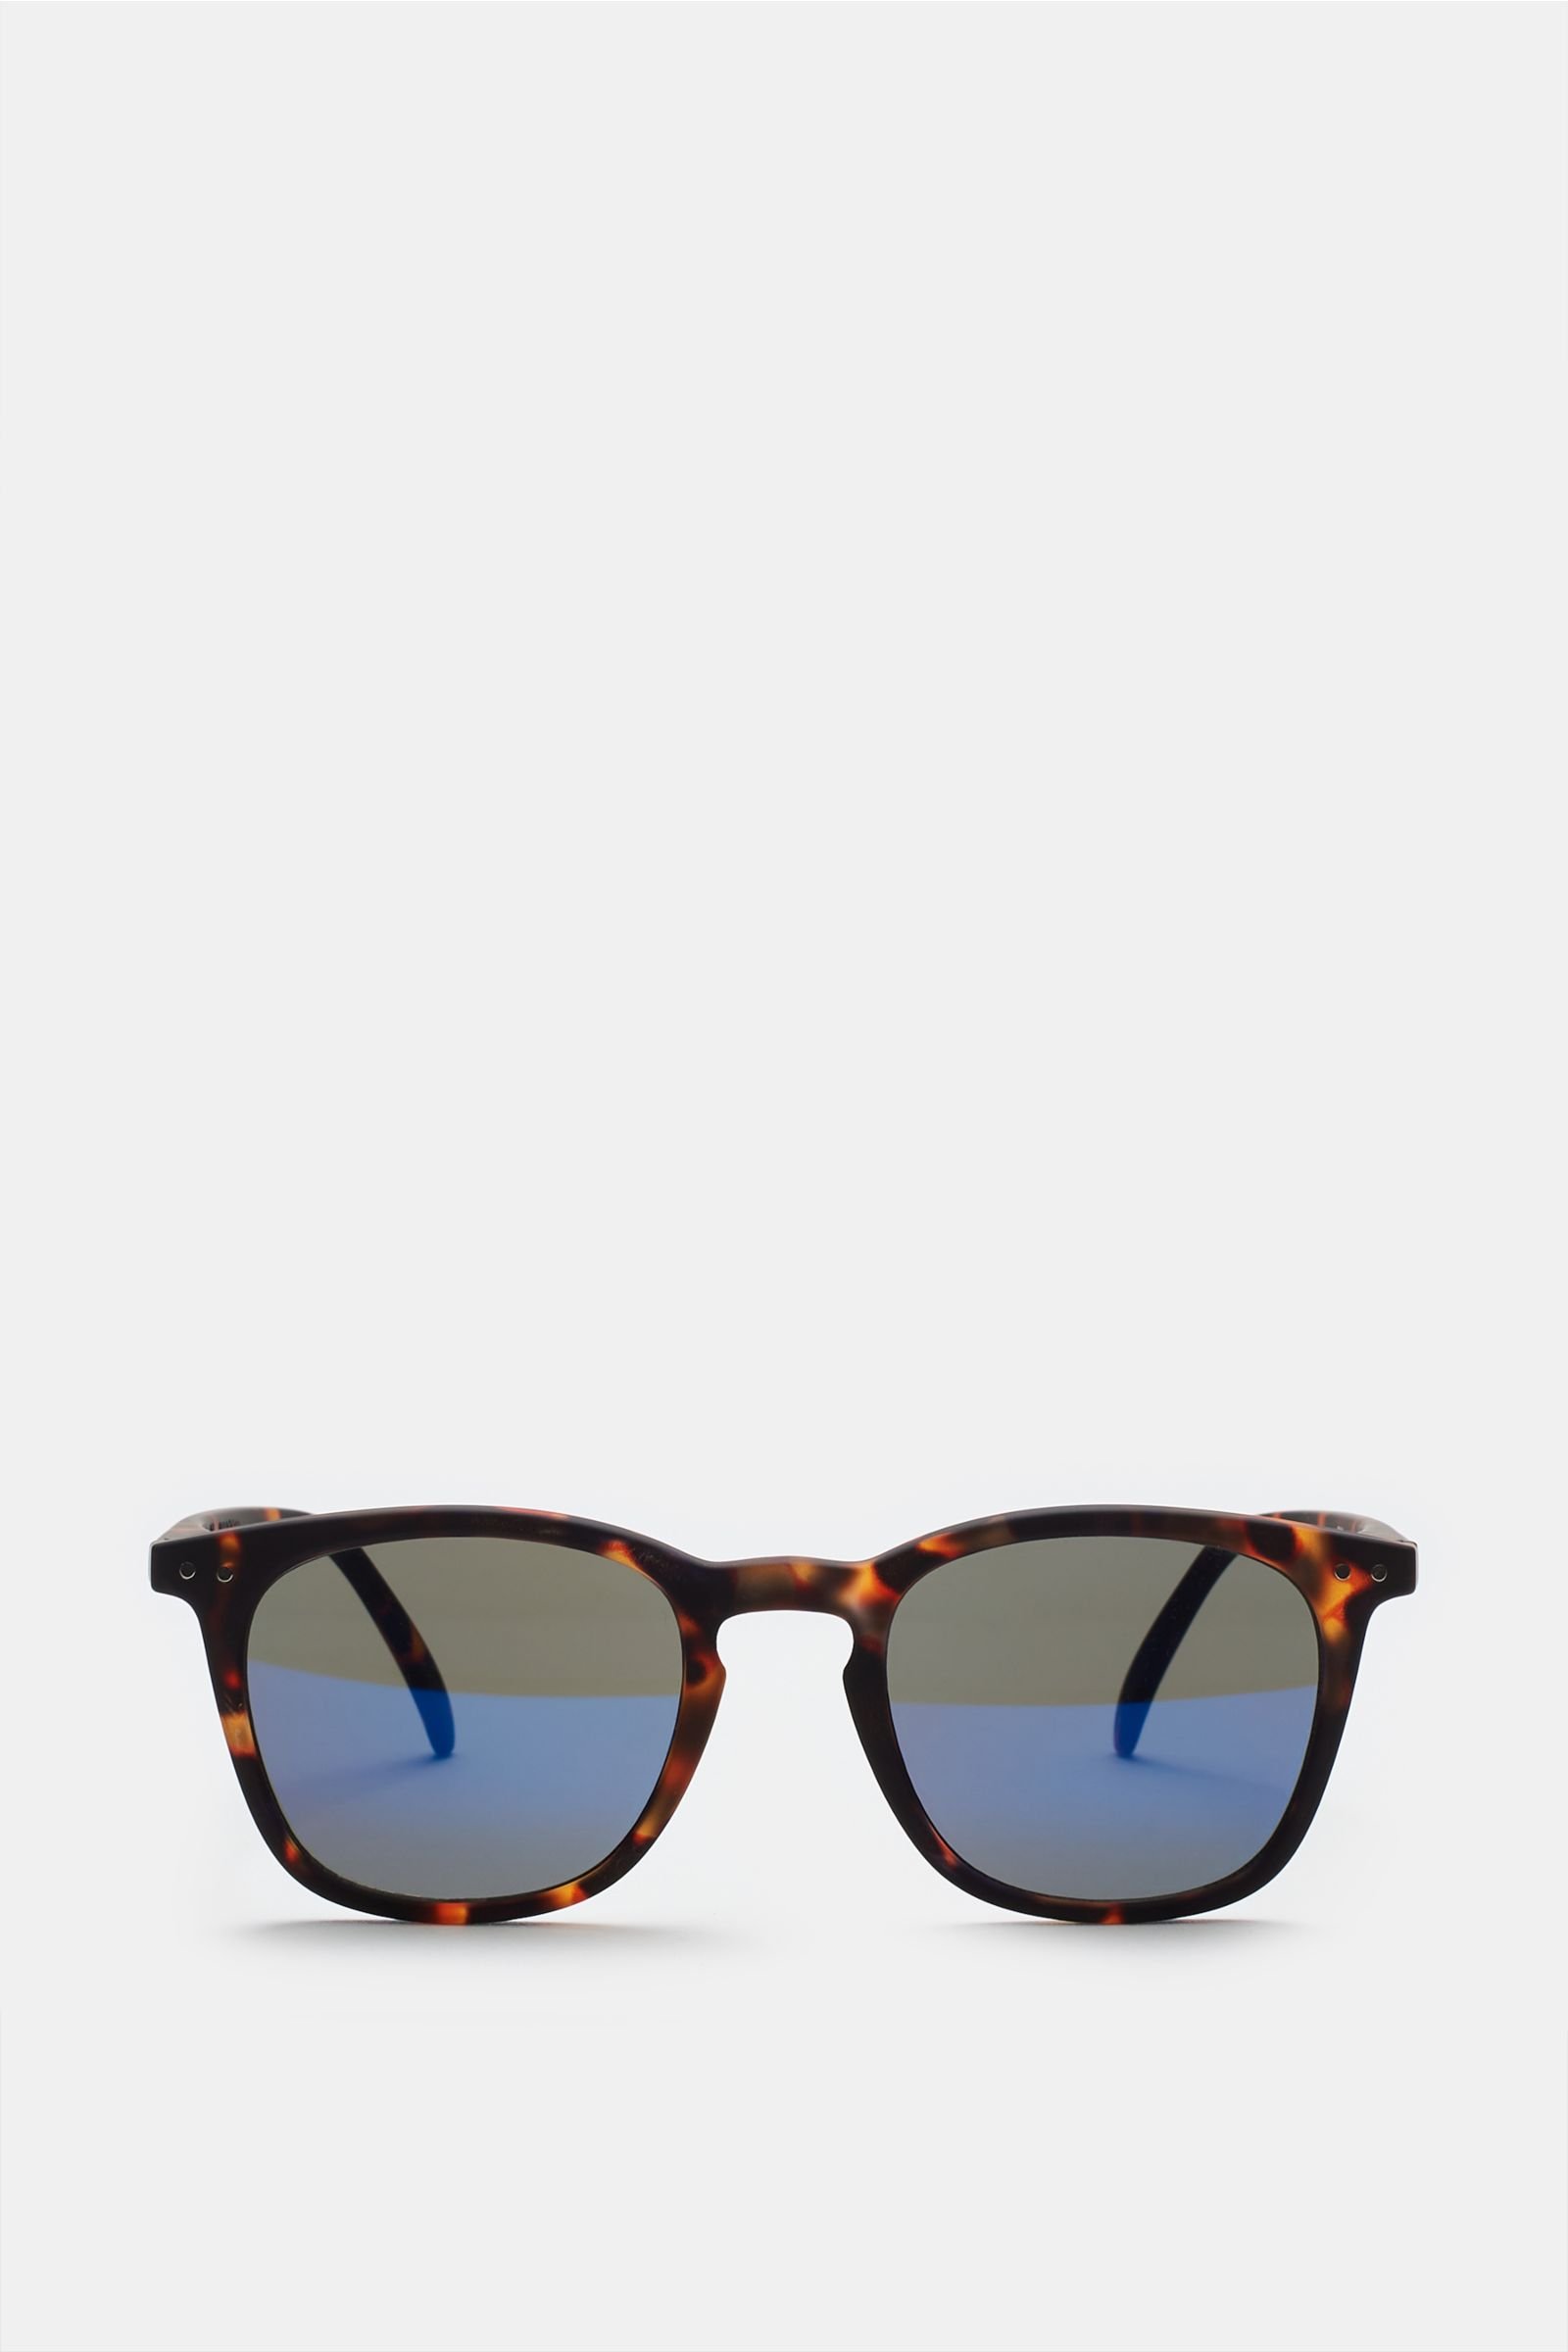 Sunglasses '#E Sun' dark brown patterned/blue